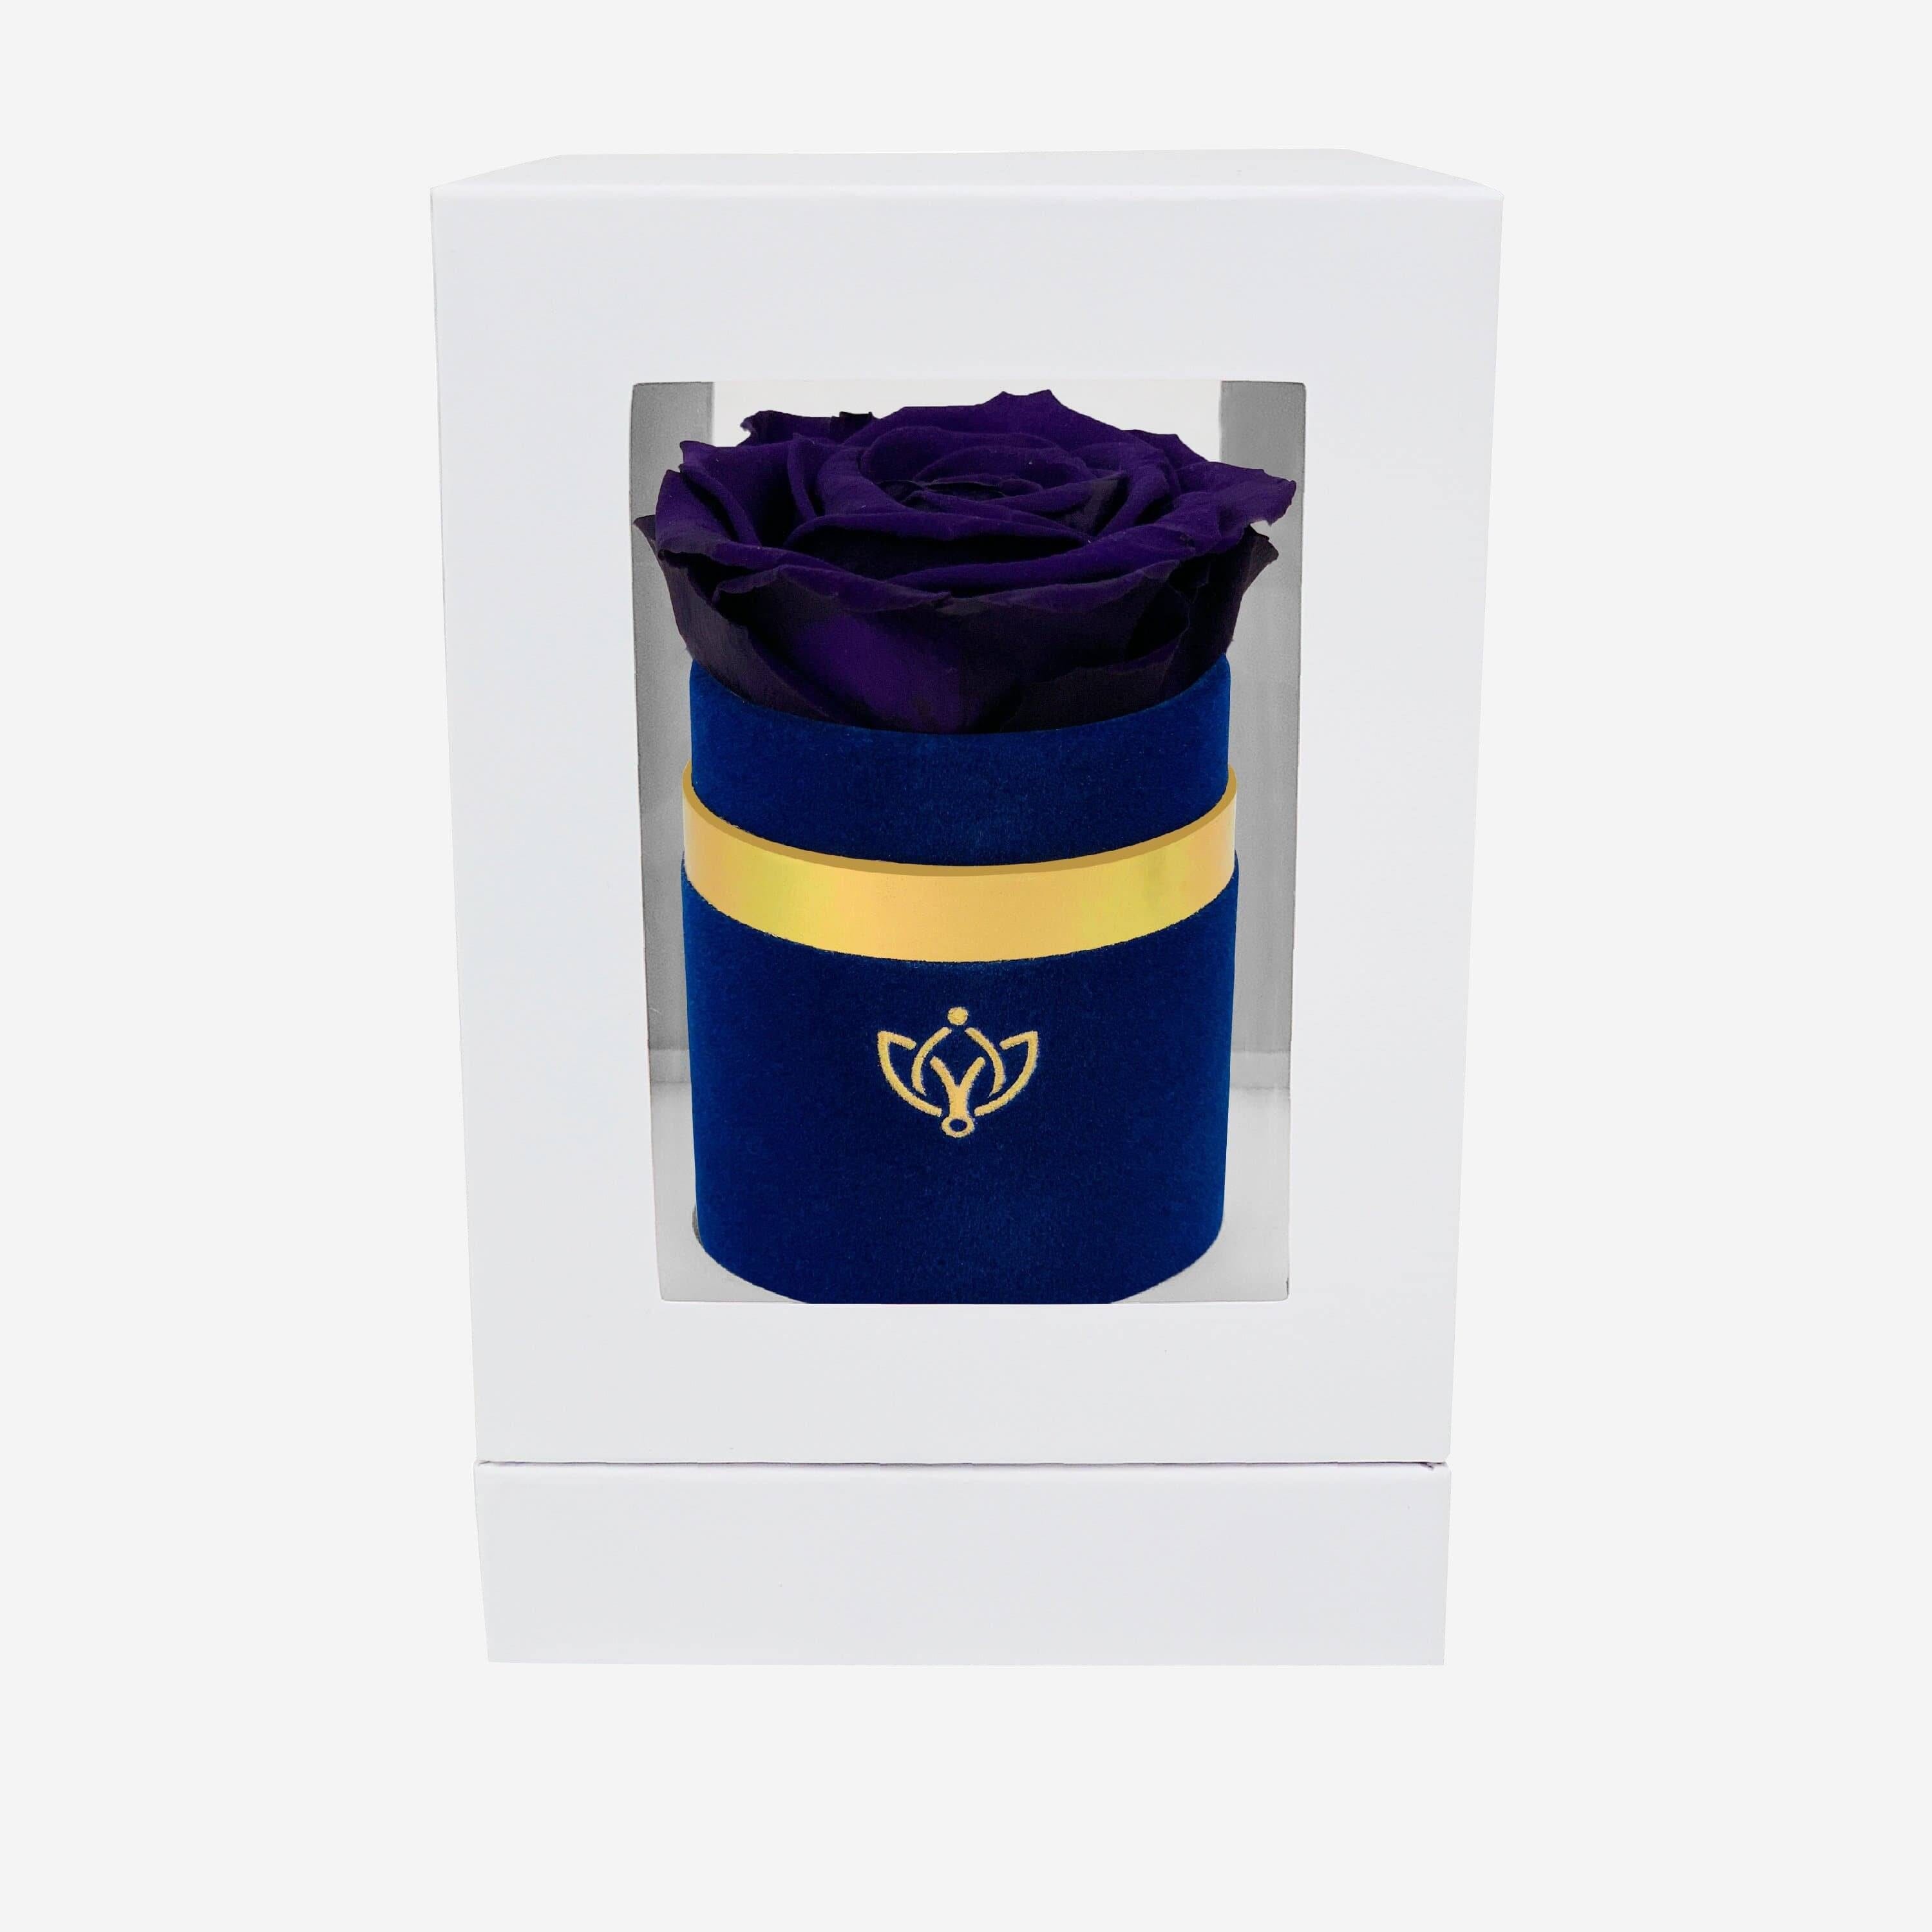 Single Royal Blue Suede Box | Dark Purple Rose - The Million Roses